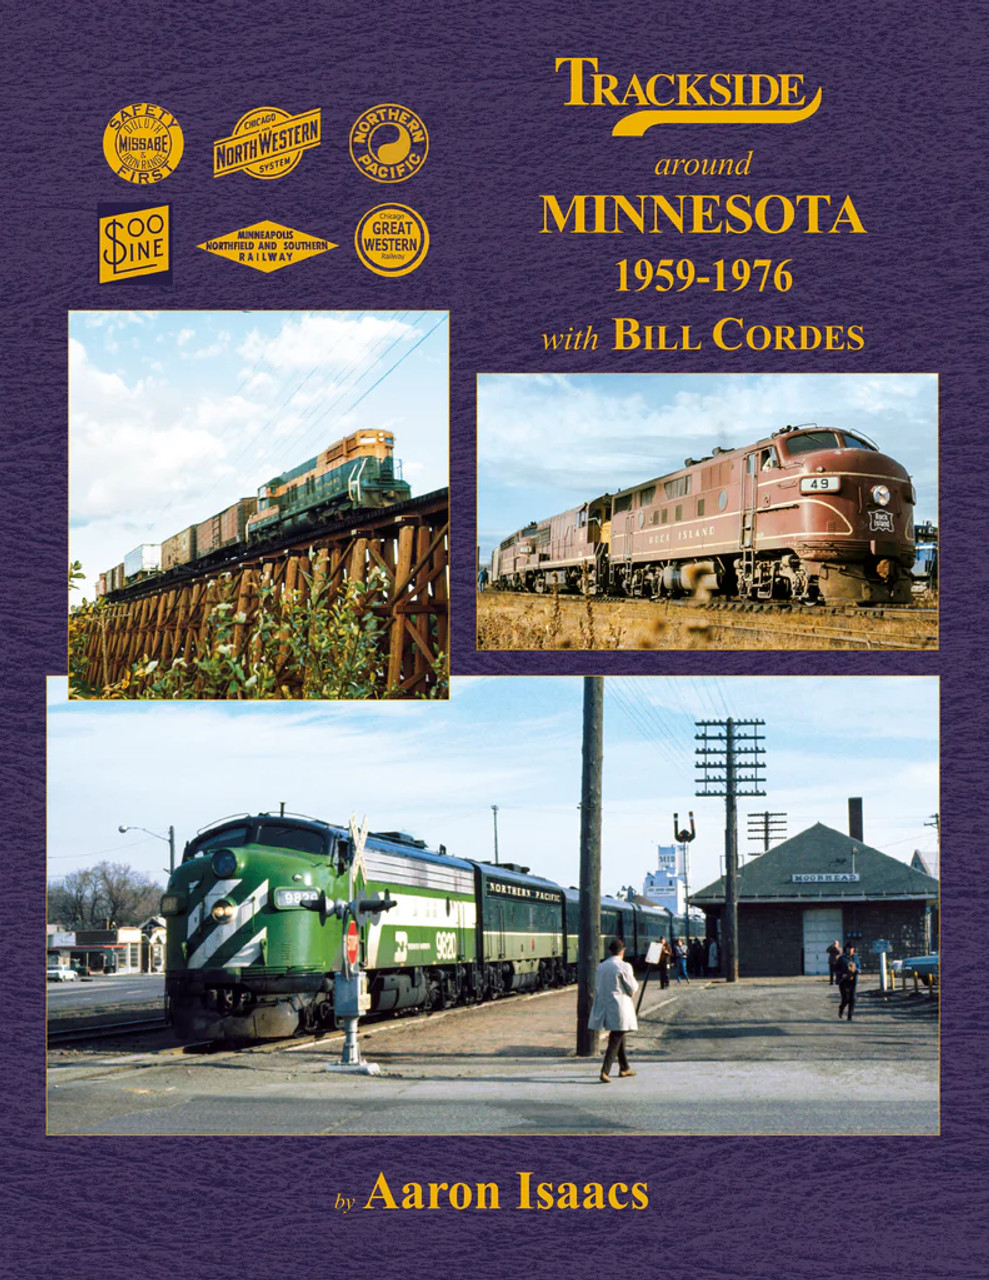 Morning Sun 1768 Trackside Around Minnesota 1959-1976 with Bill Cordes